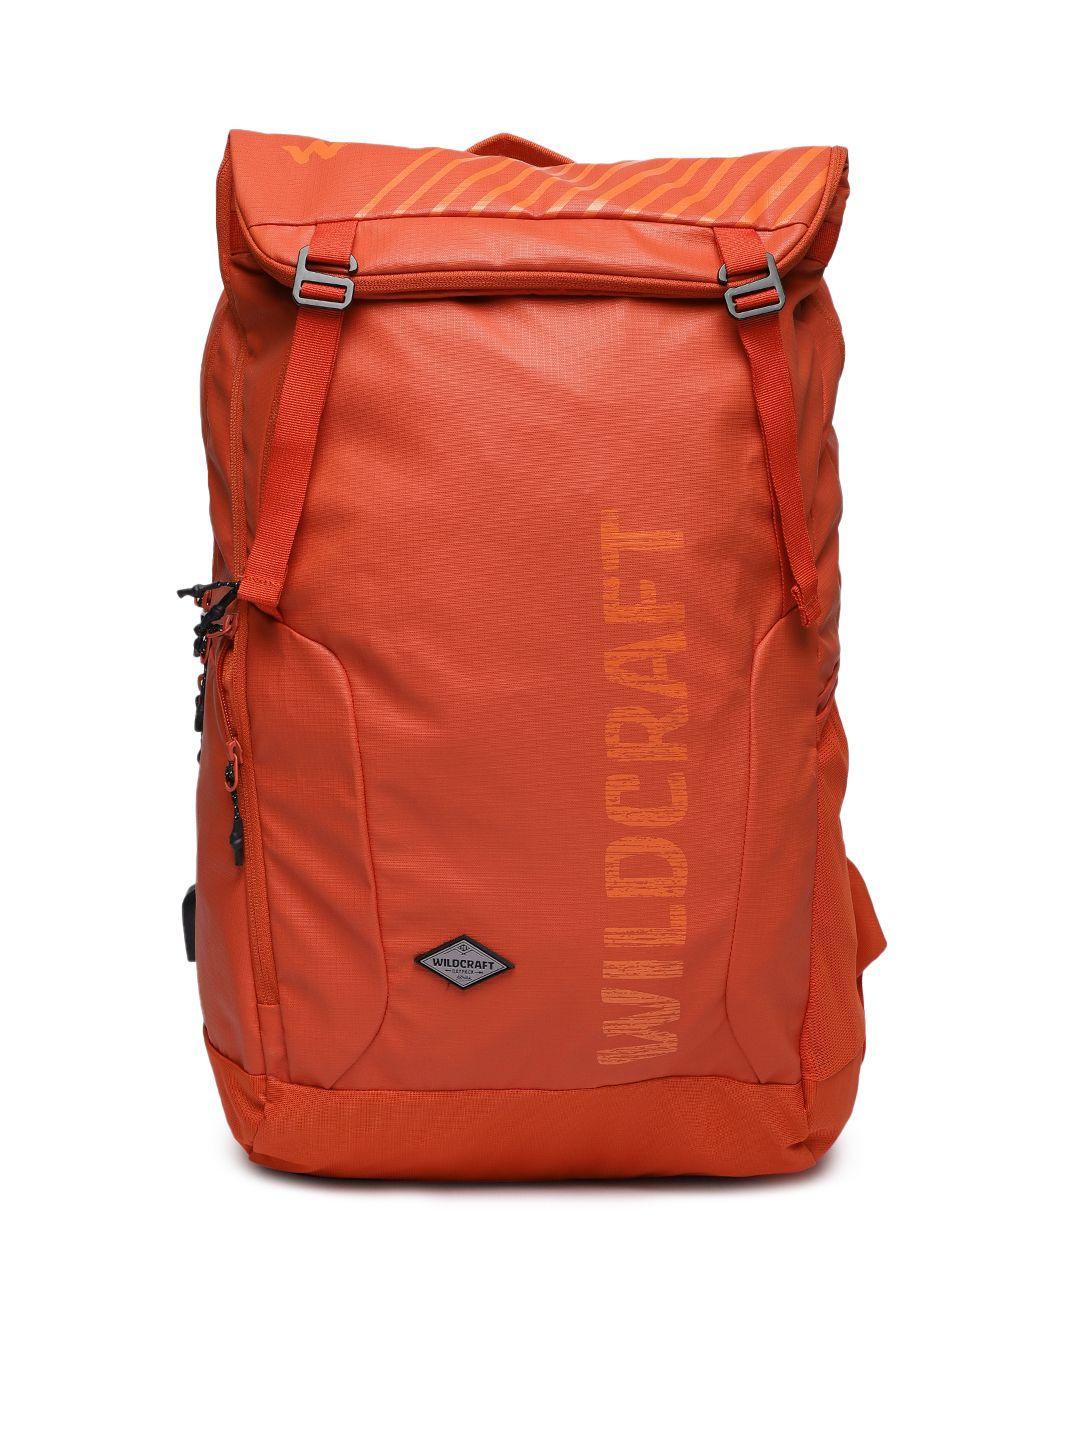 wildcraft unisex orange aether brand logo backpack